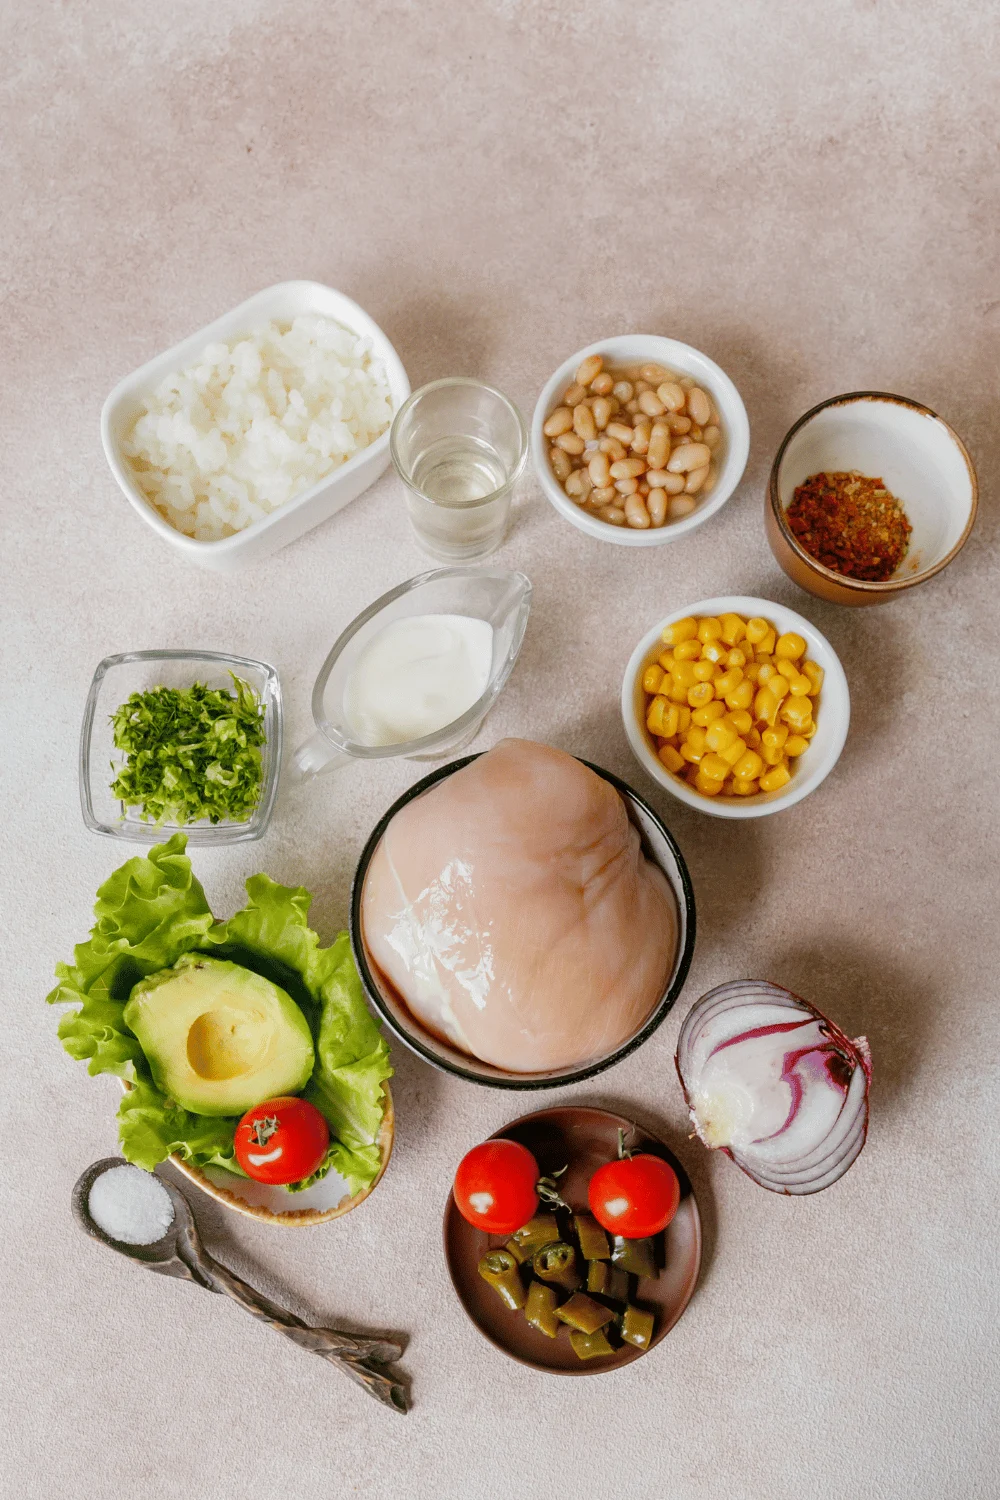 ingredients for weight watchers friendly chicken burrito bowl